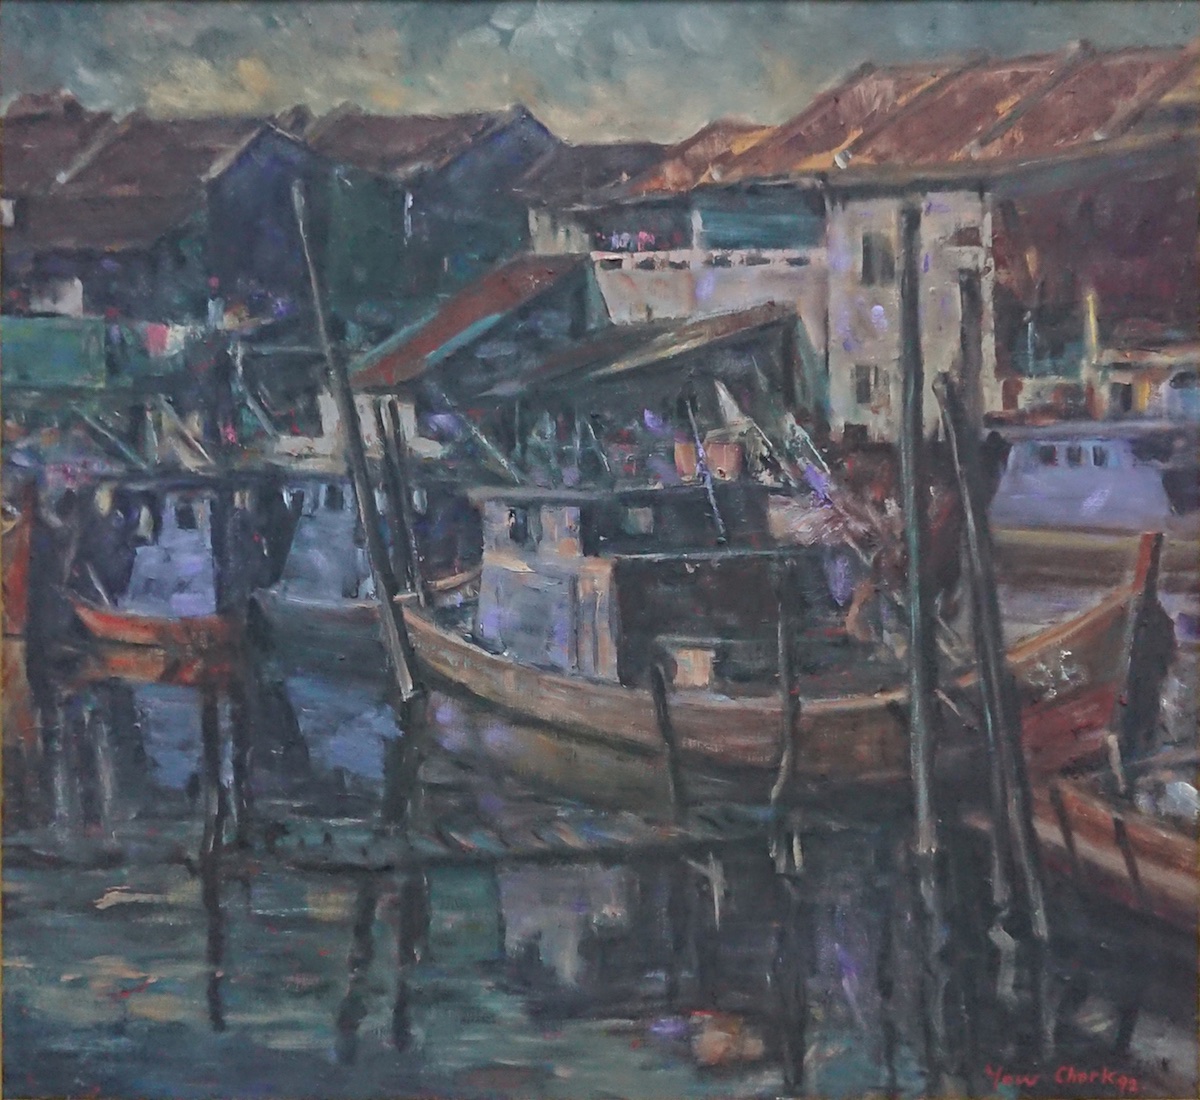 Malacca Riverfront (1992) by Fung Yow Chork